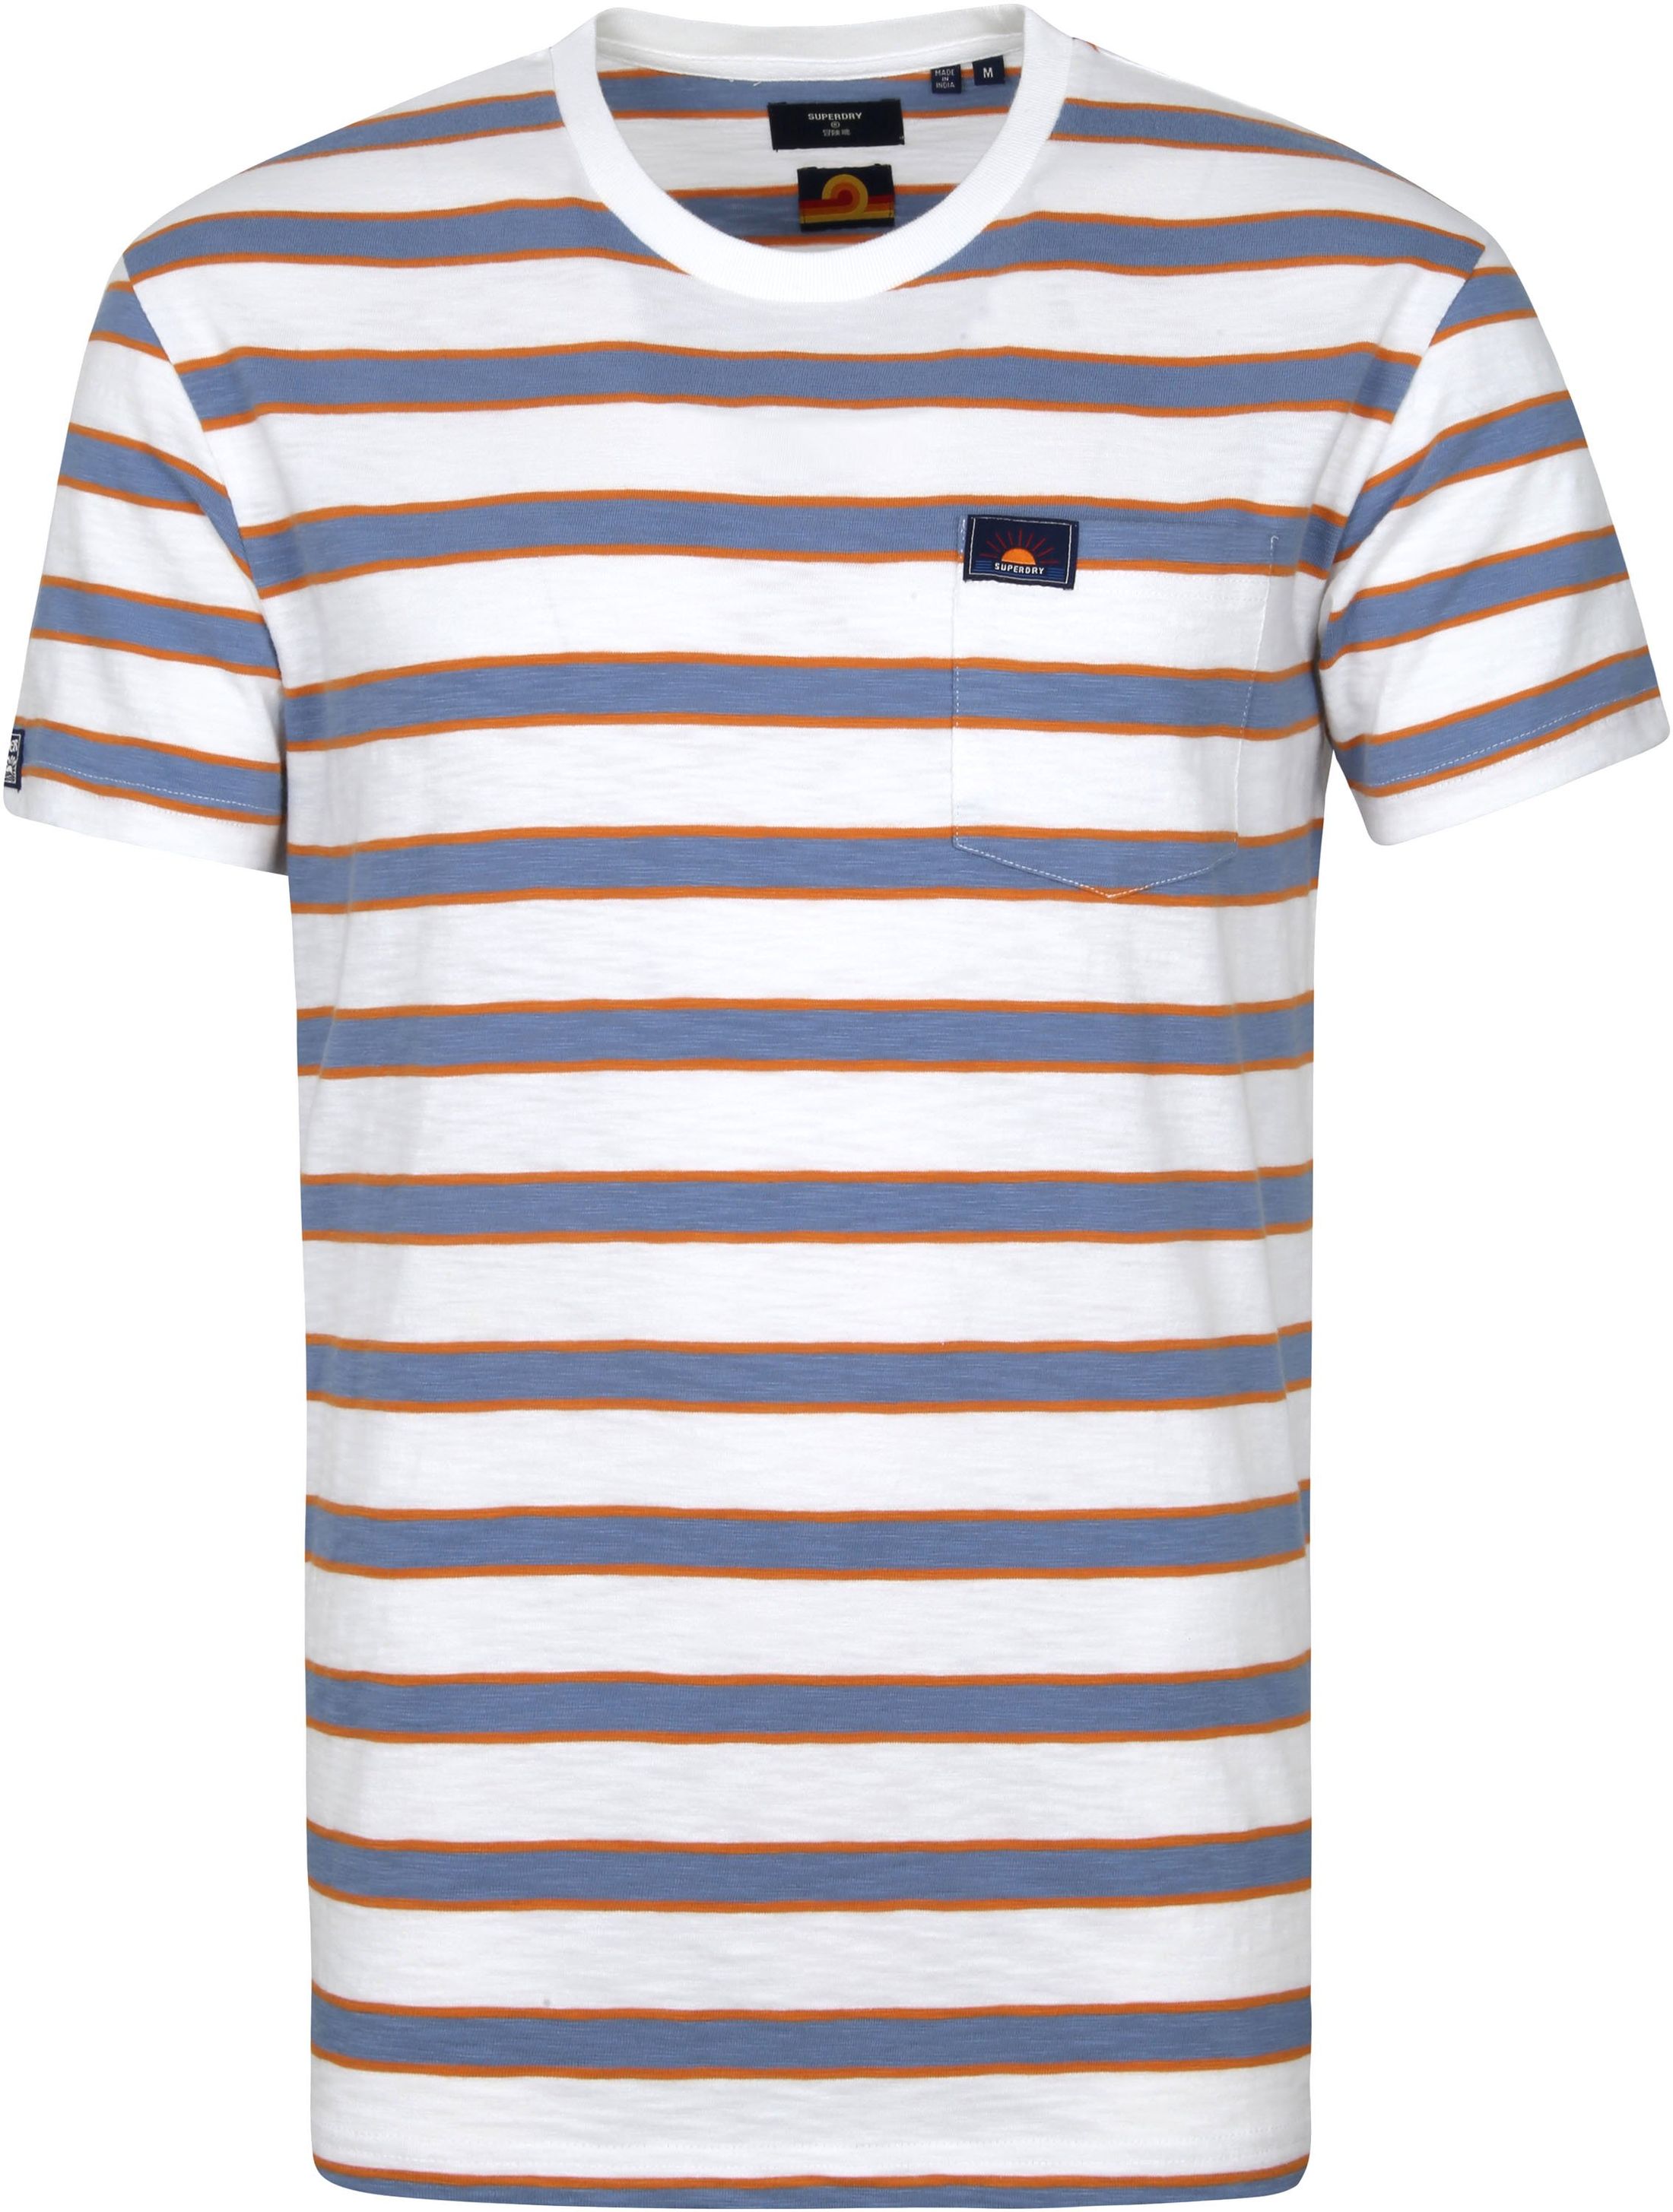 Superdry Surf T Shirt Stripes Blue White size M